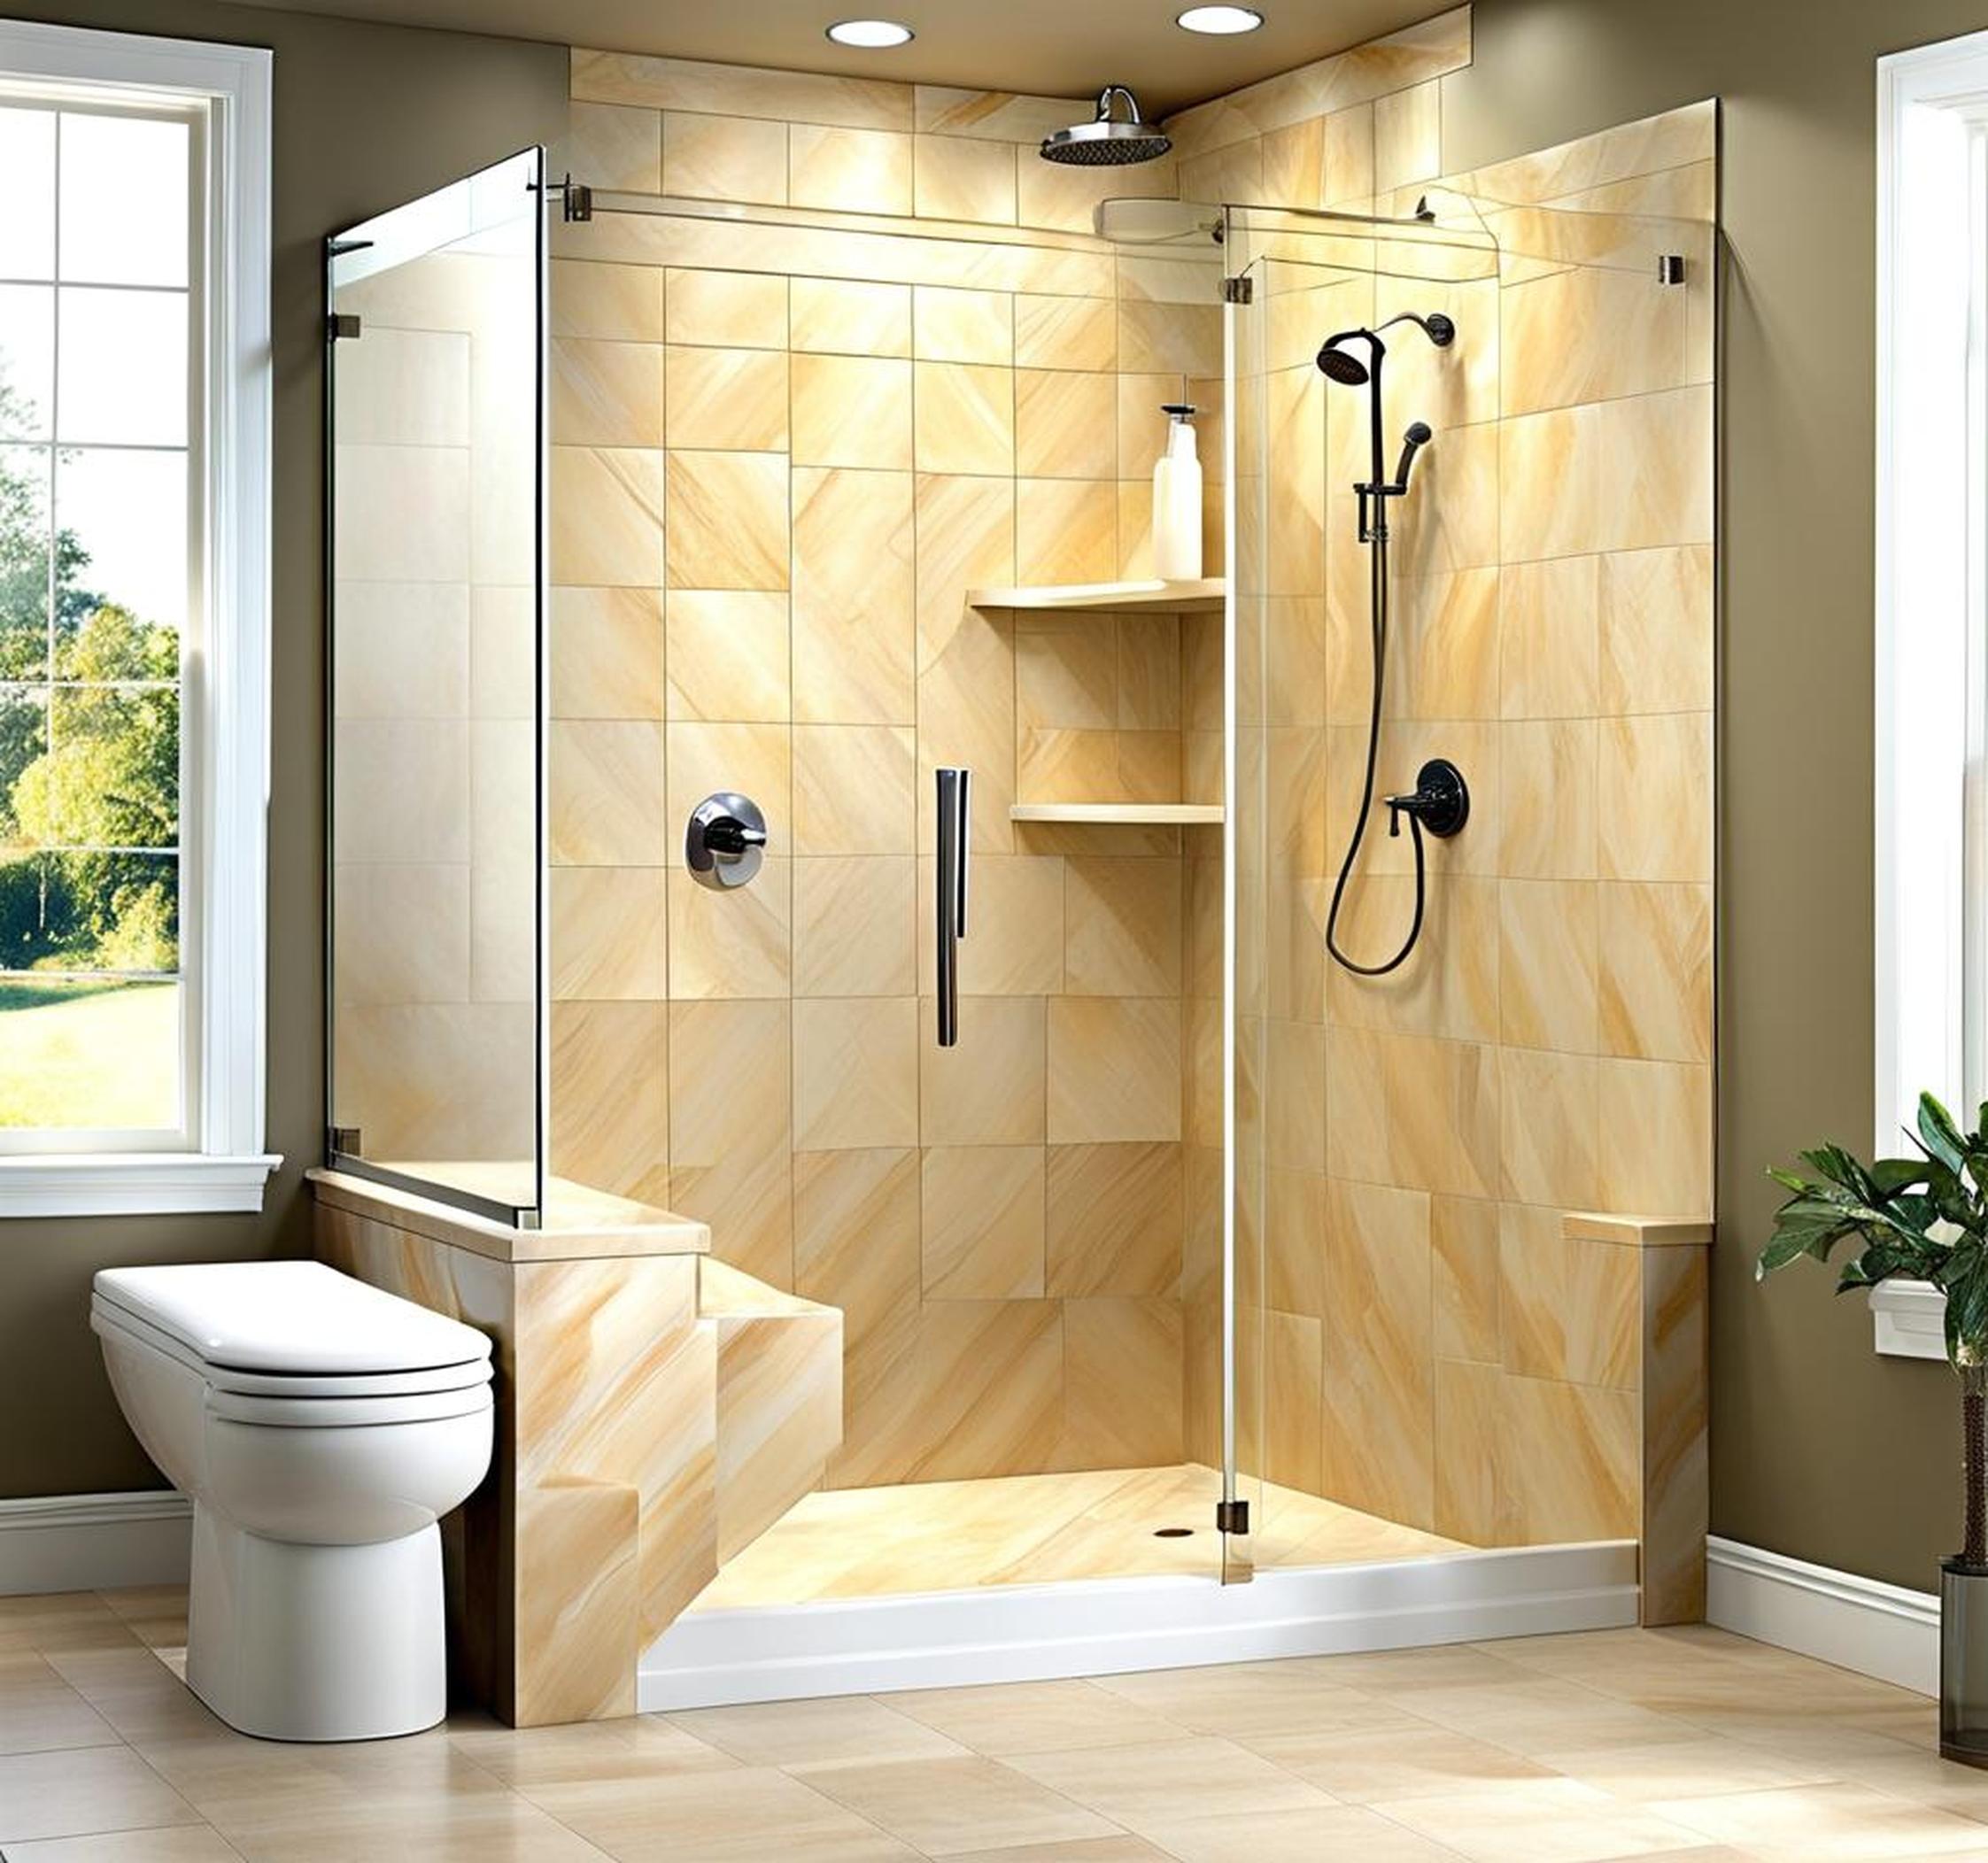 acrylic shower walls that look like tile